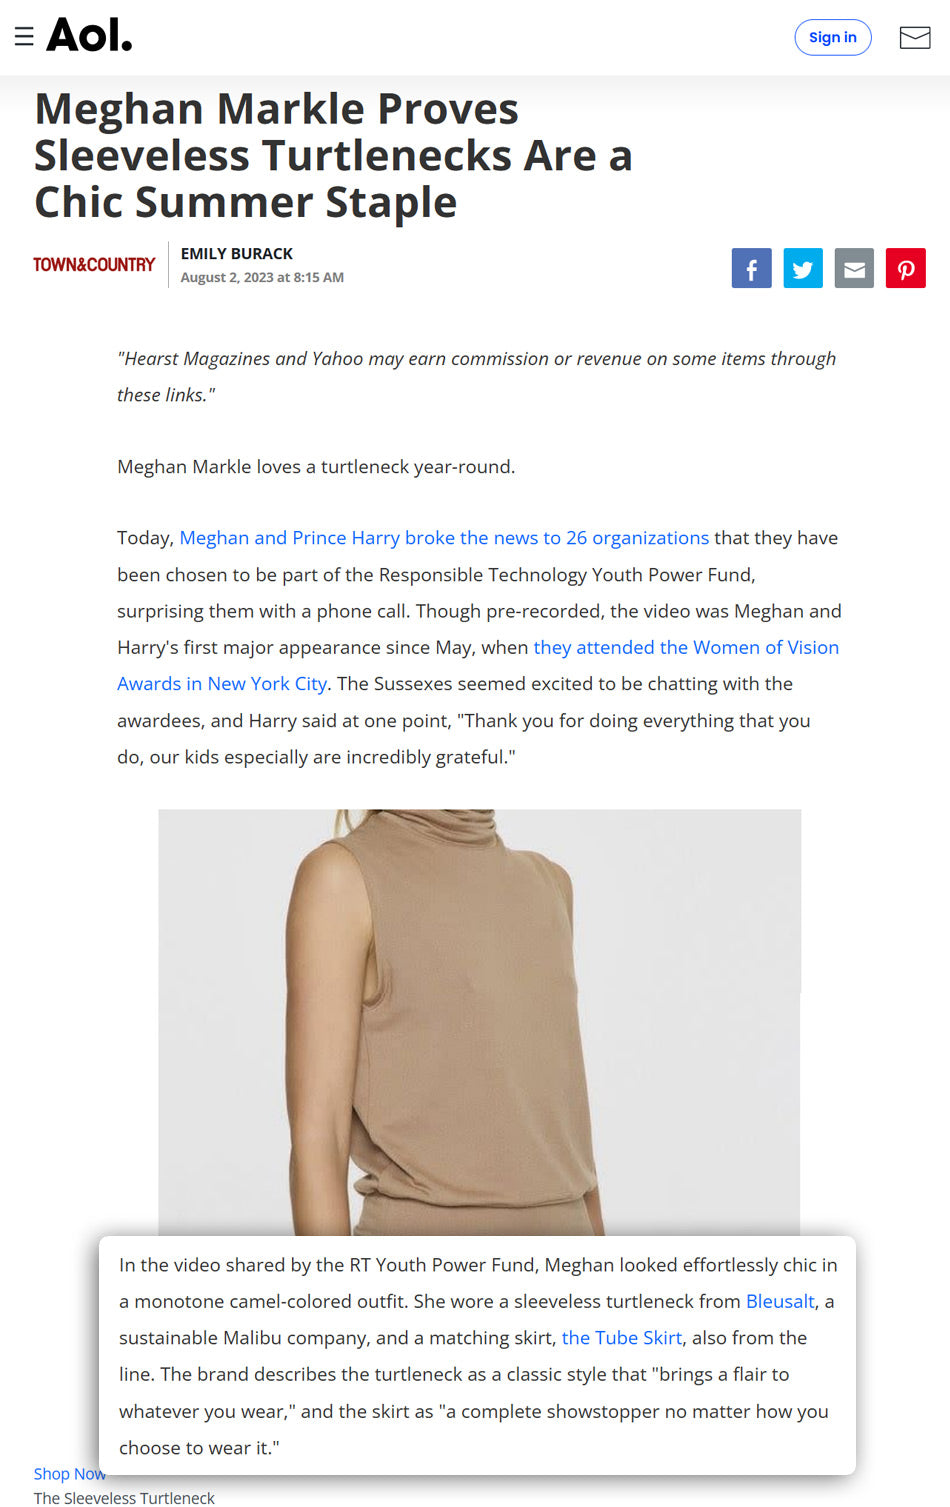 Meghan Markle Proves Sleeveless Turtlenecks Are a Chic Summer Staple